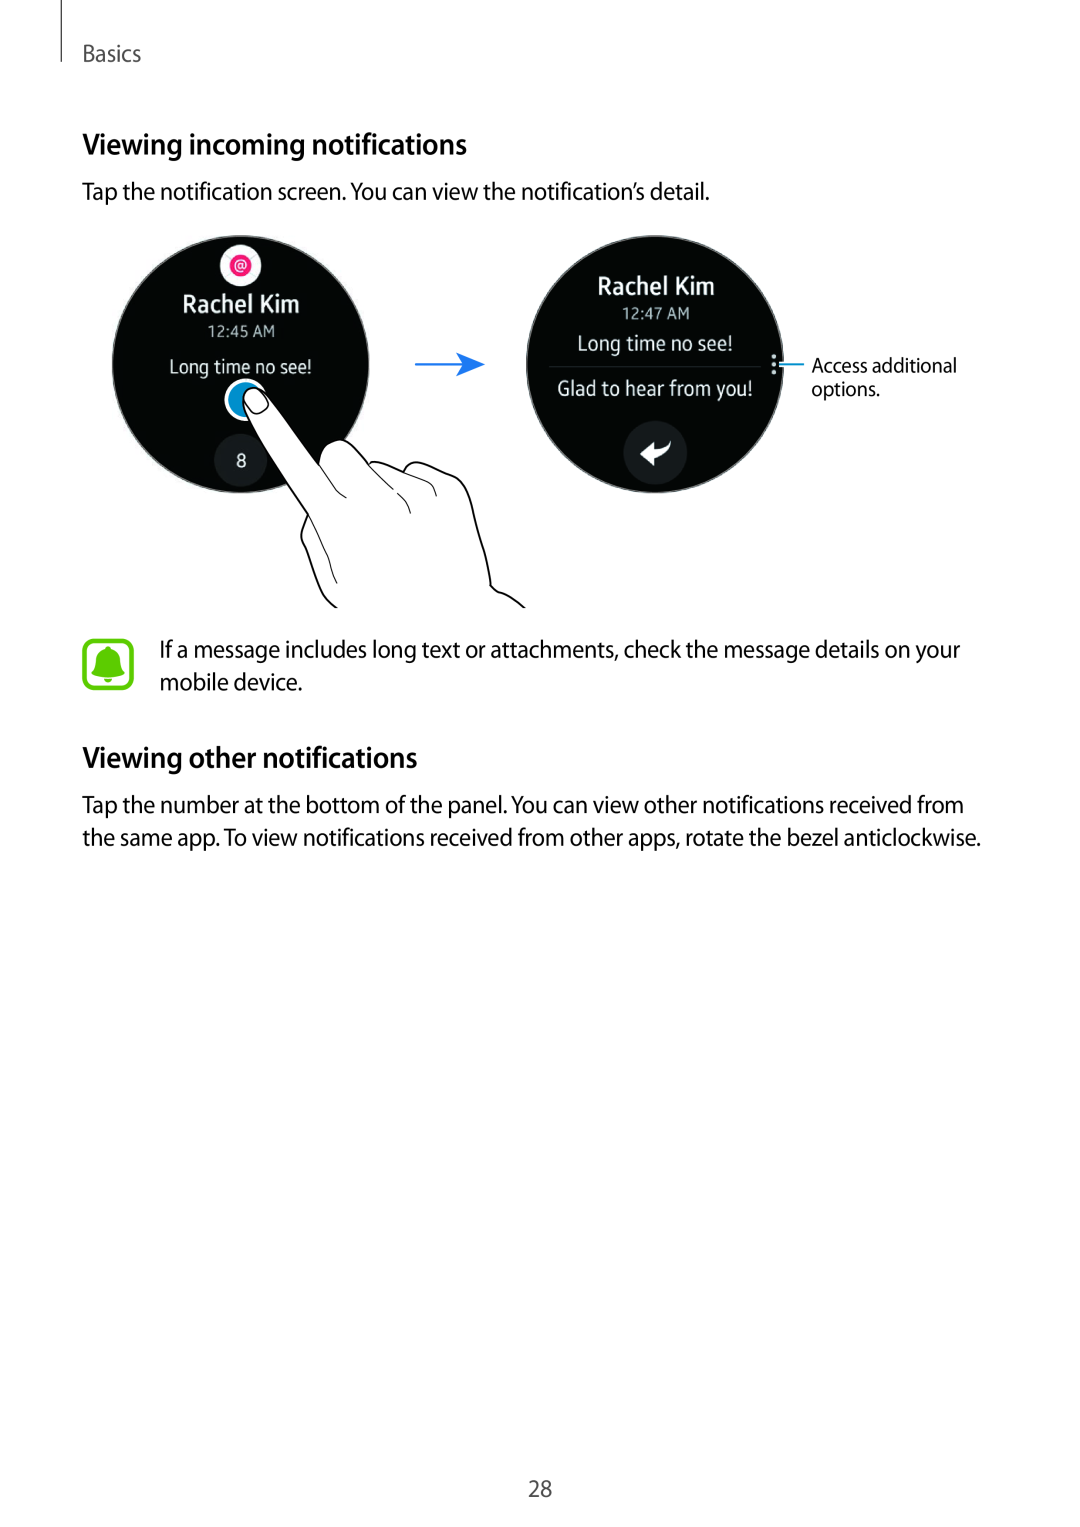 Samsung SM-R7320ZDAKSA Viewing incoming notifications, Viewing other notifications, Basics, Access additional options 